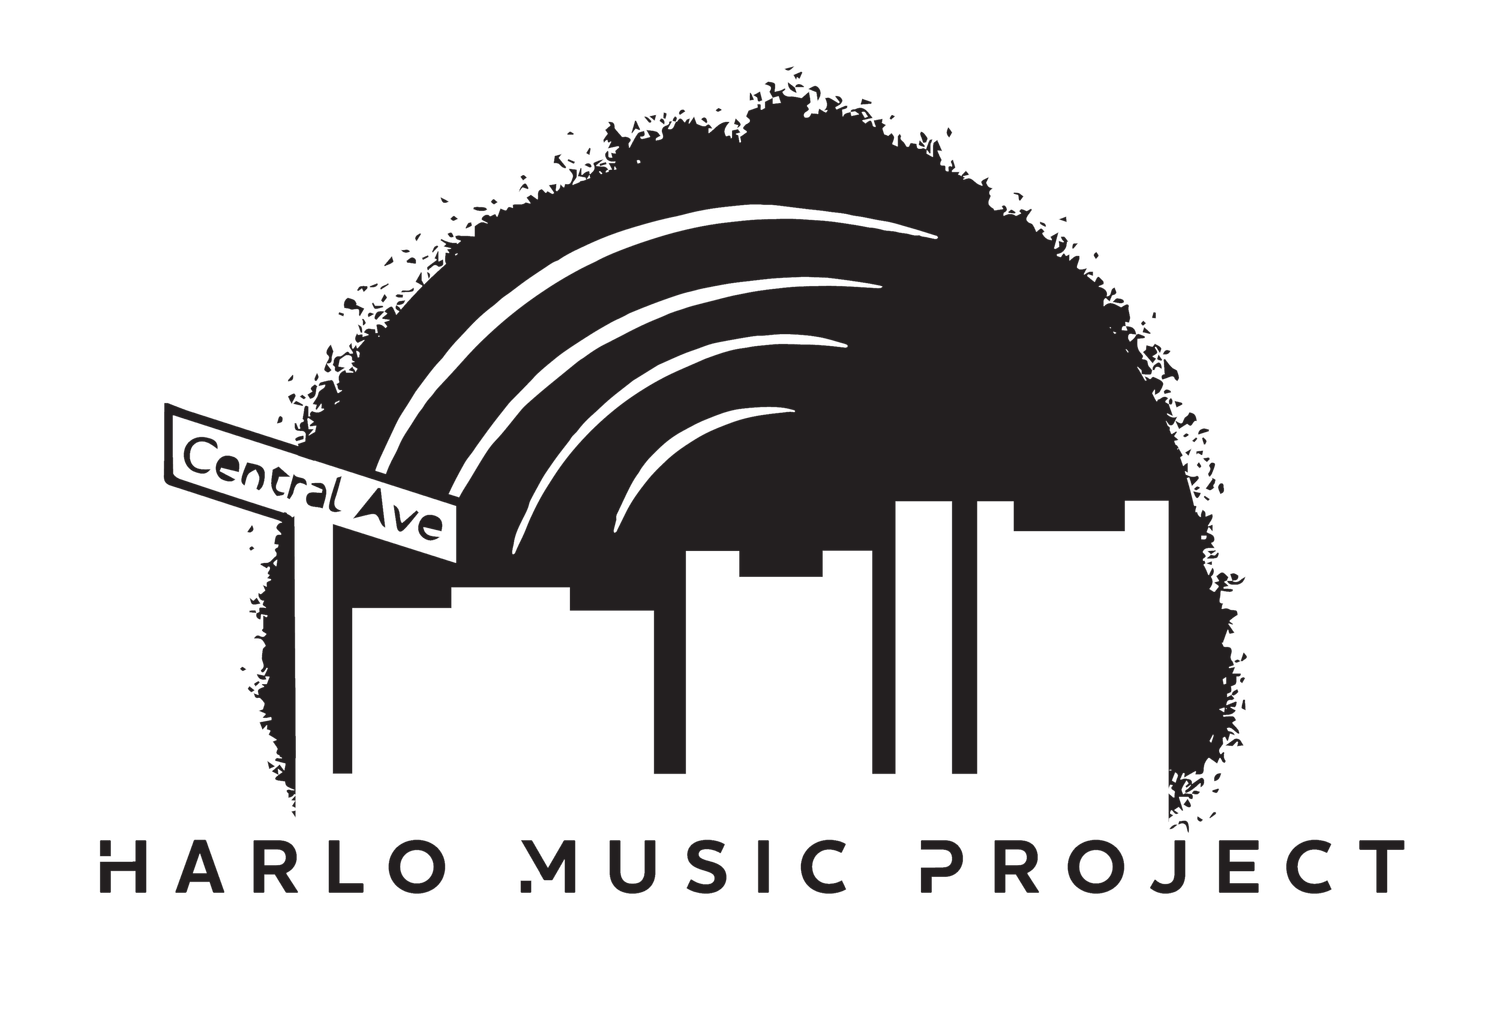 Harlo Music Project 